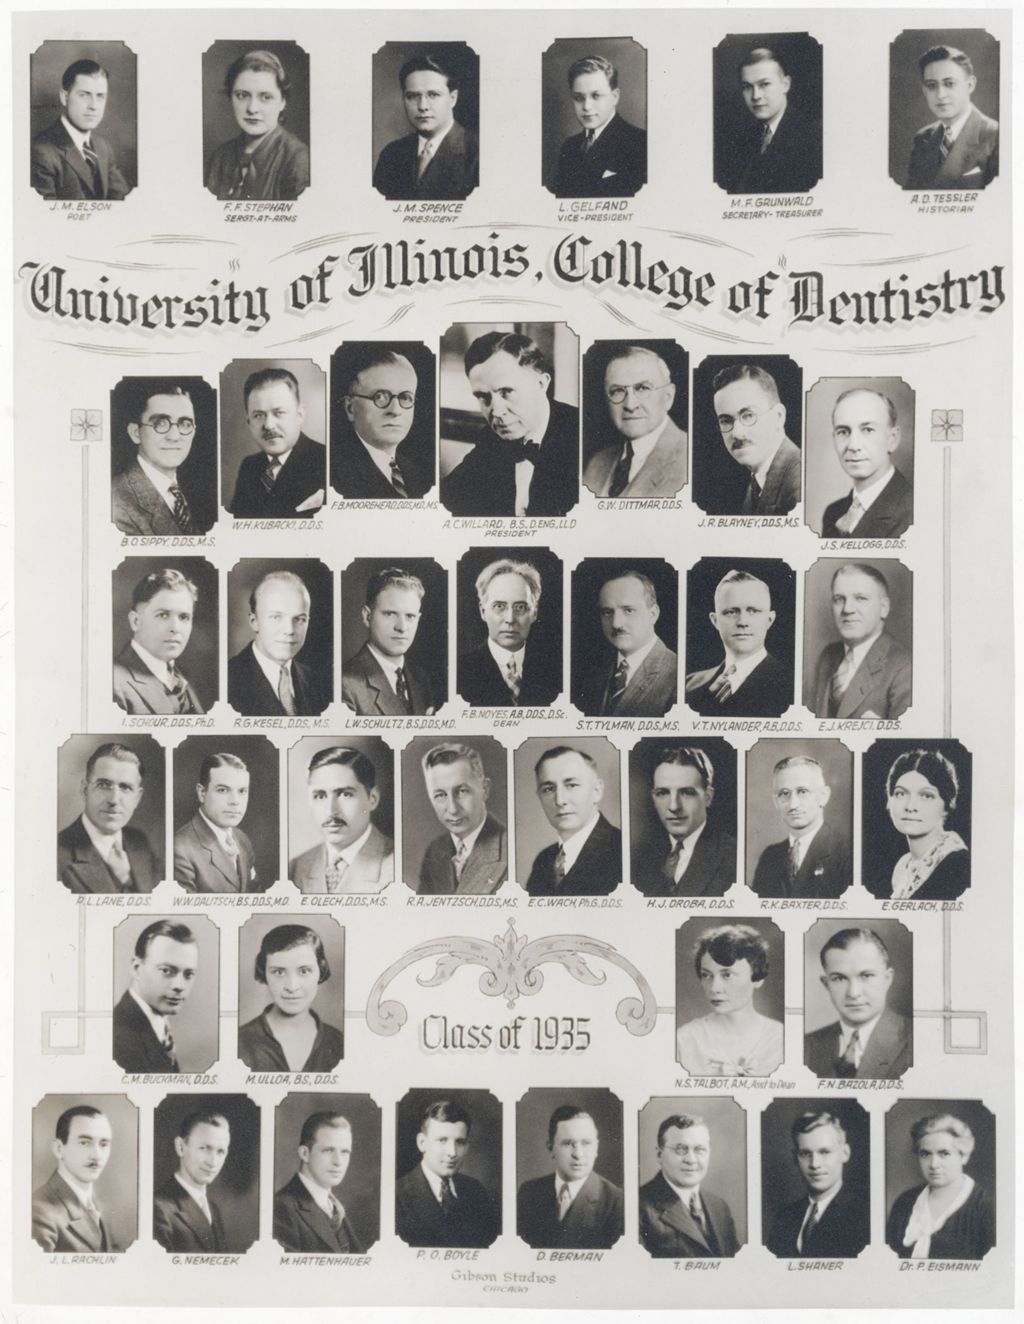 Miniature of 1935 graduating class, University of Illinois College of Dentistry